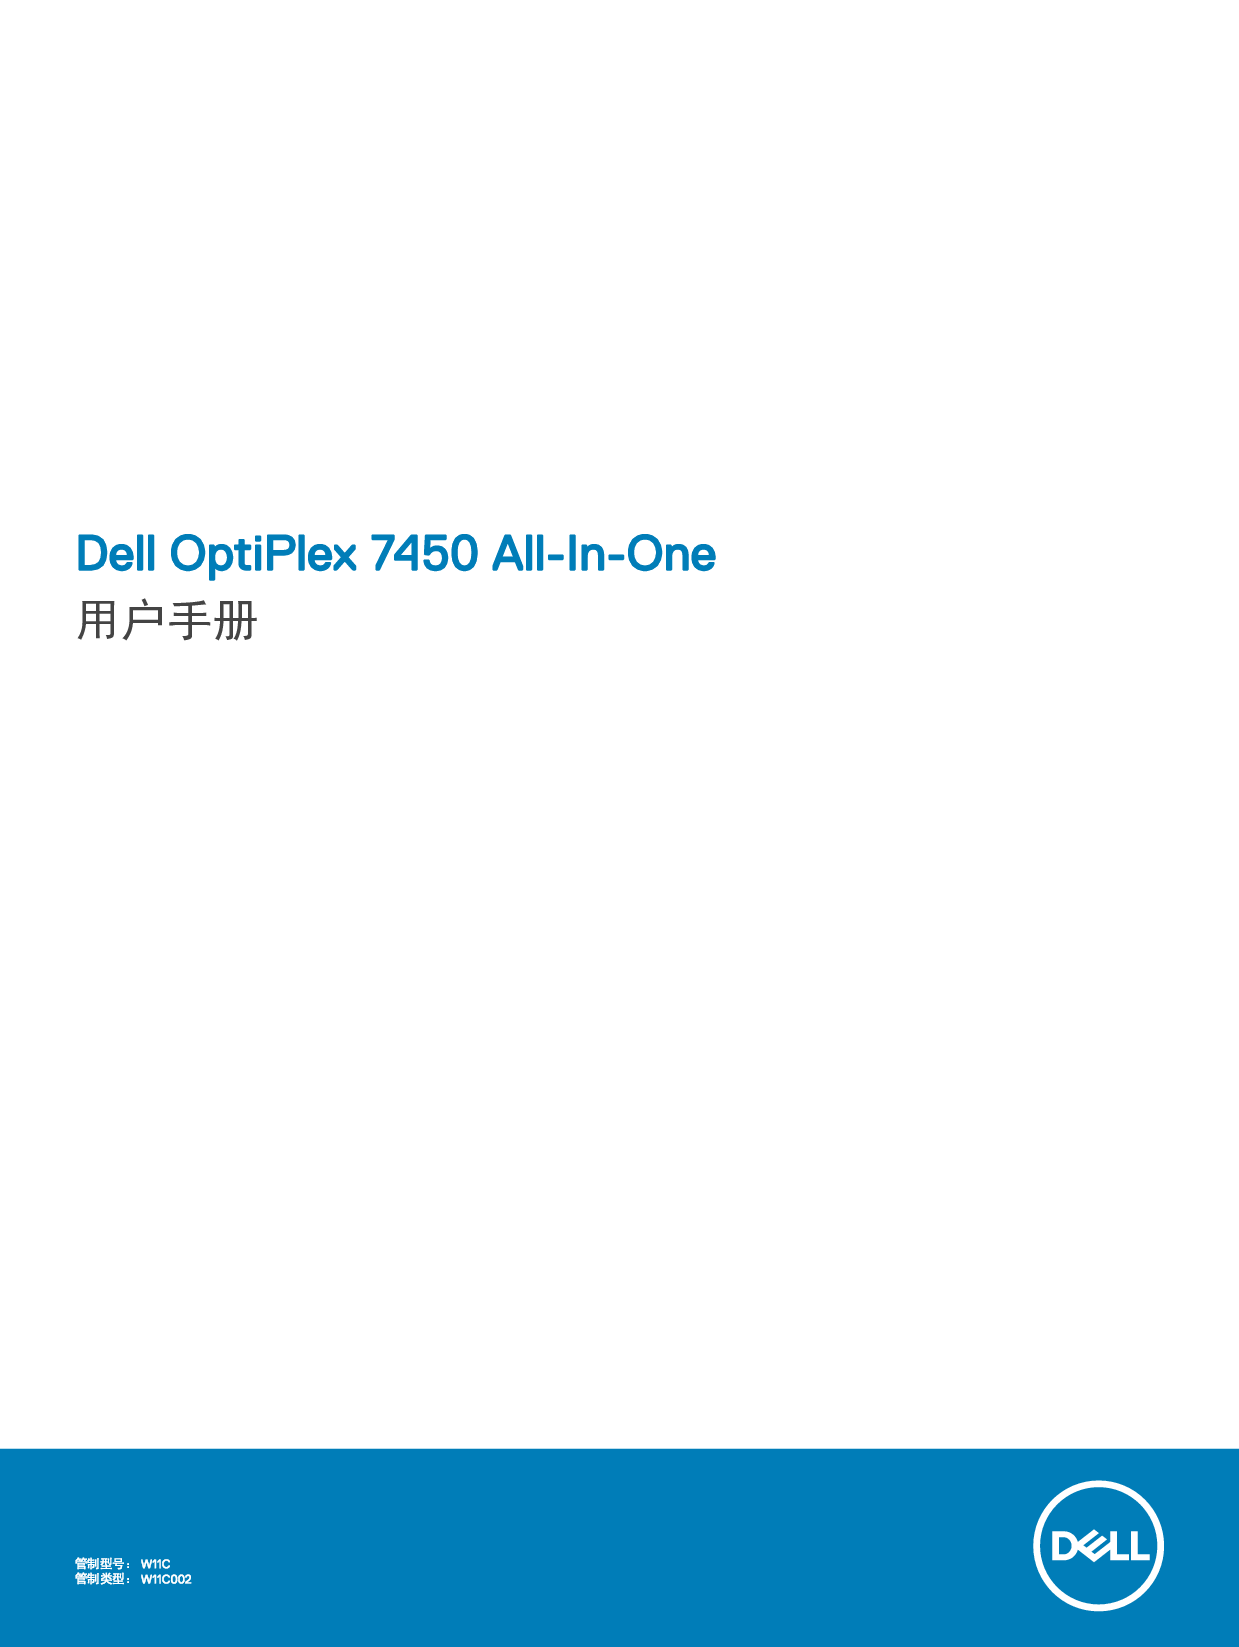 戴尔 Dell Optiplex 7450 AIO 用户手册 封面